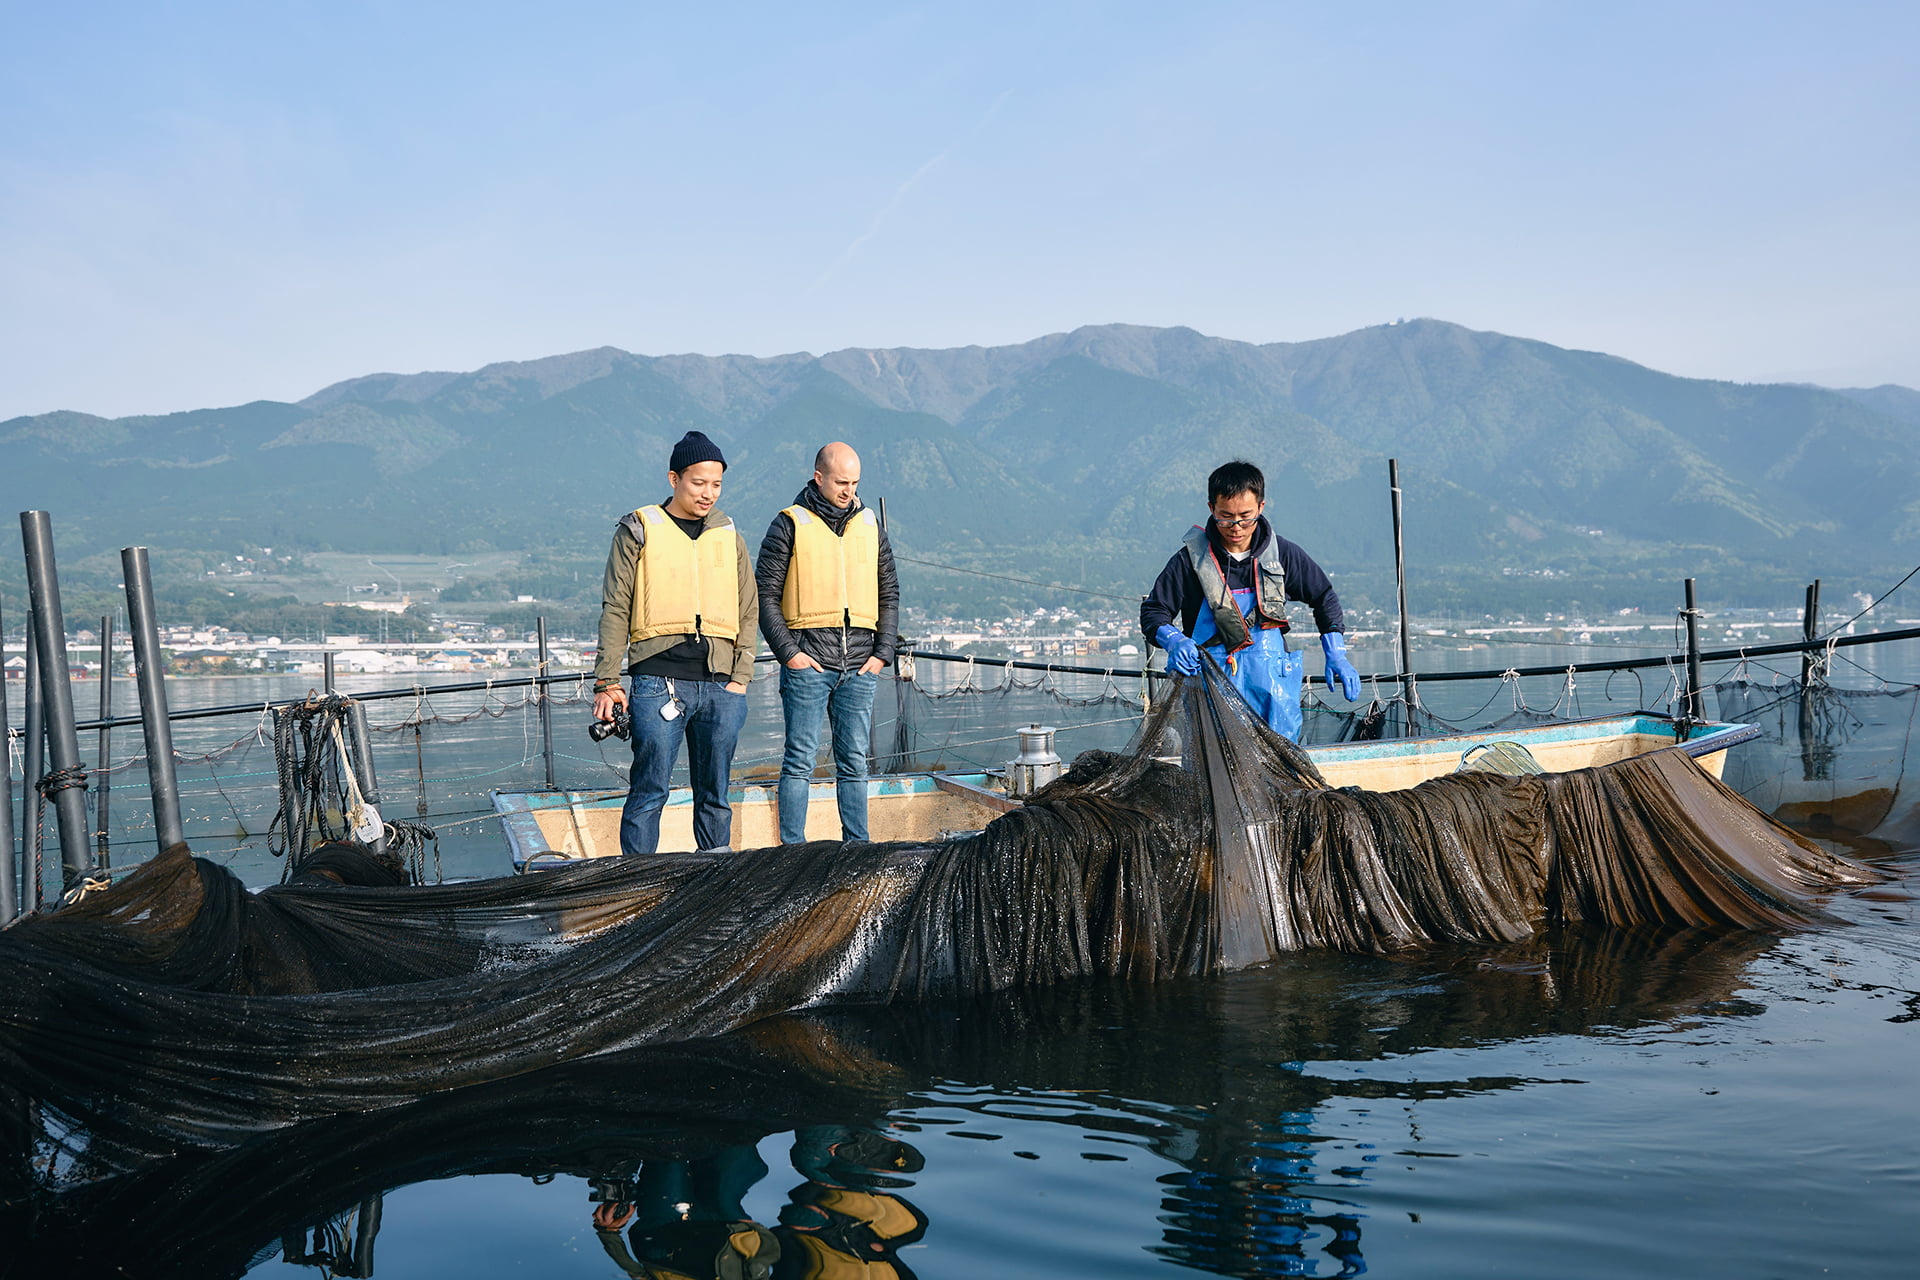 Observing the fisherman at Japan's biggest lake